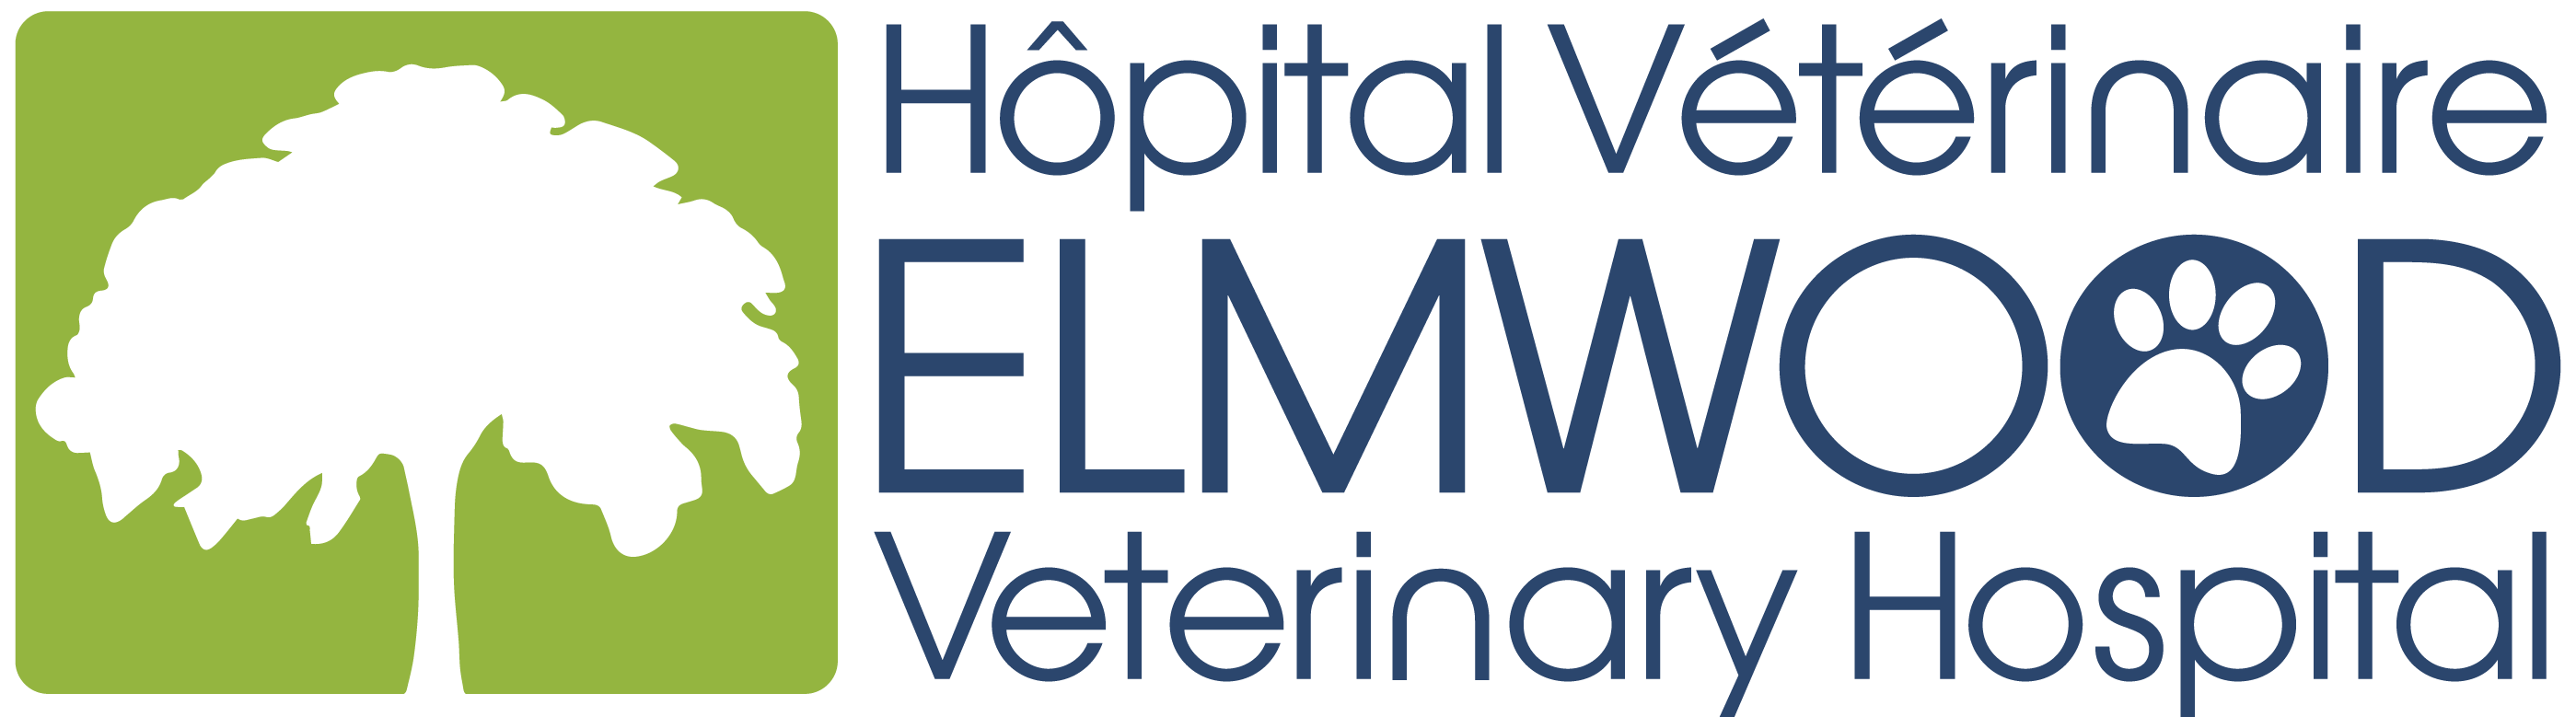 Logo of Elmwood Veterinary Hospital in Moncton, NB